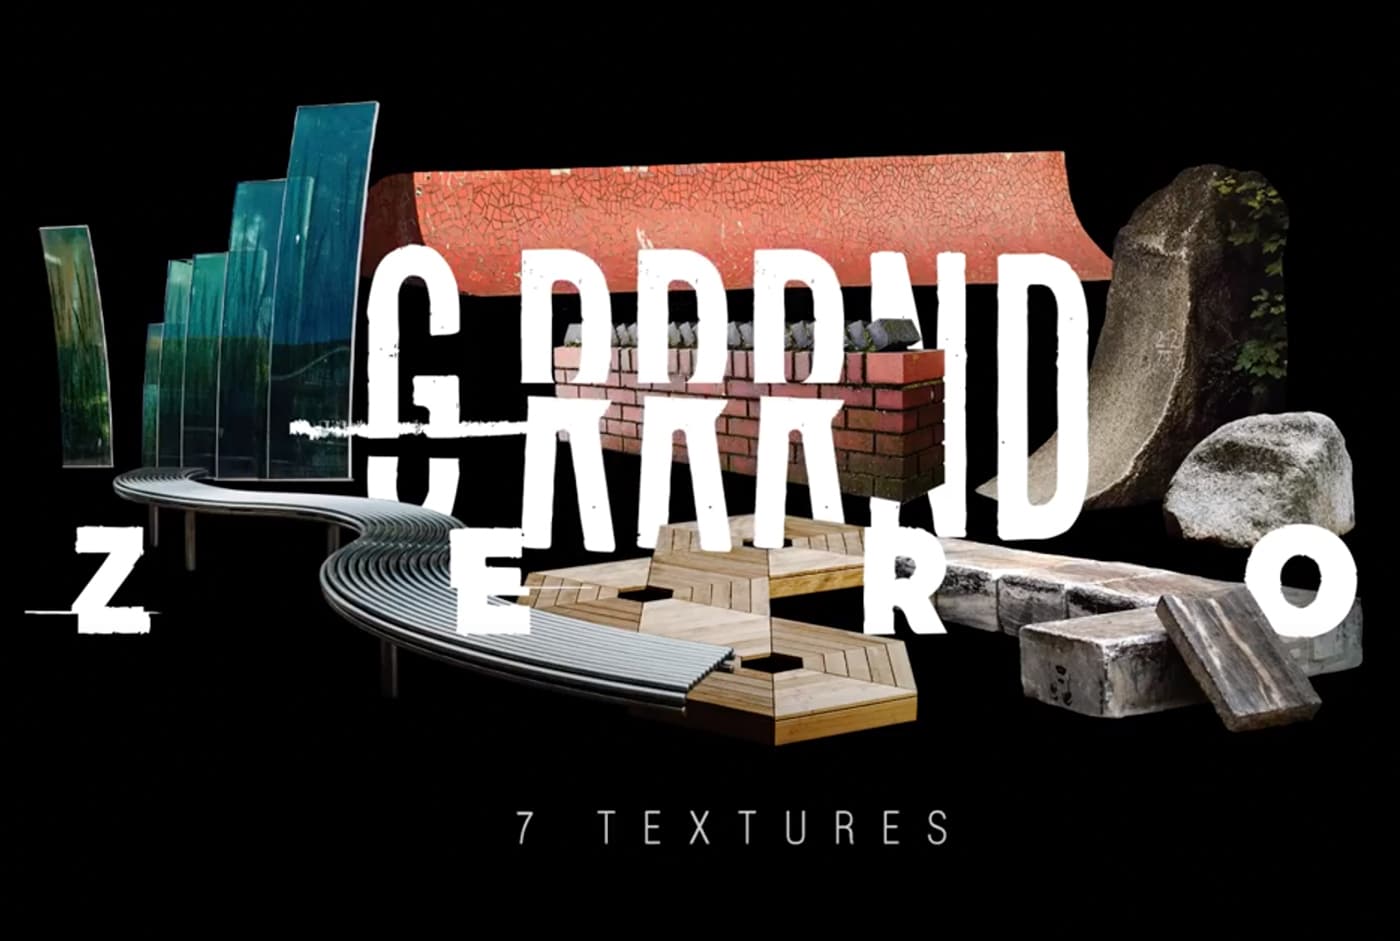 grrrnd-zero-Julien-Paccard-7-textures-irregularskatemag